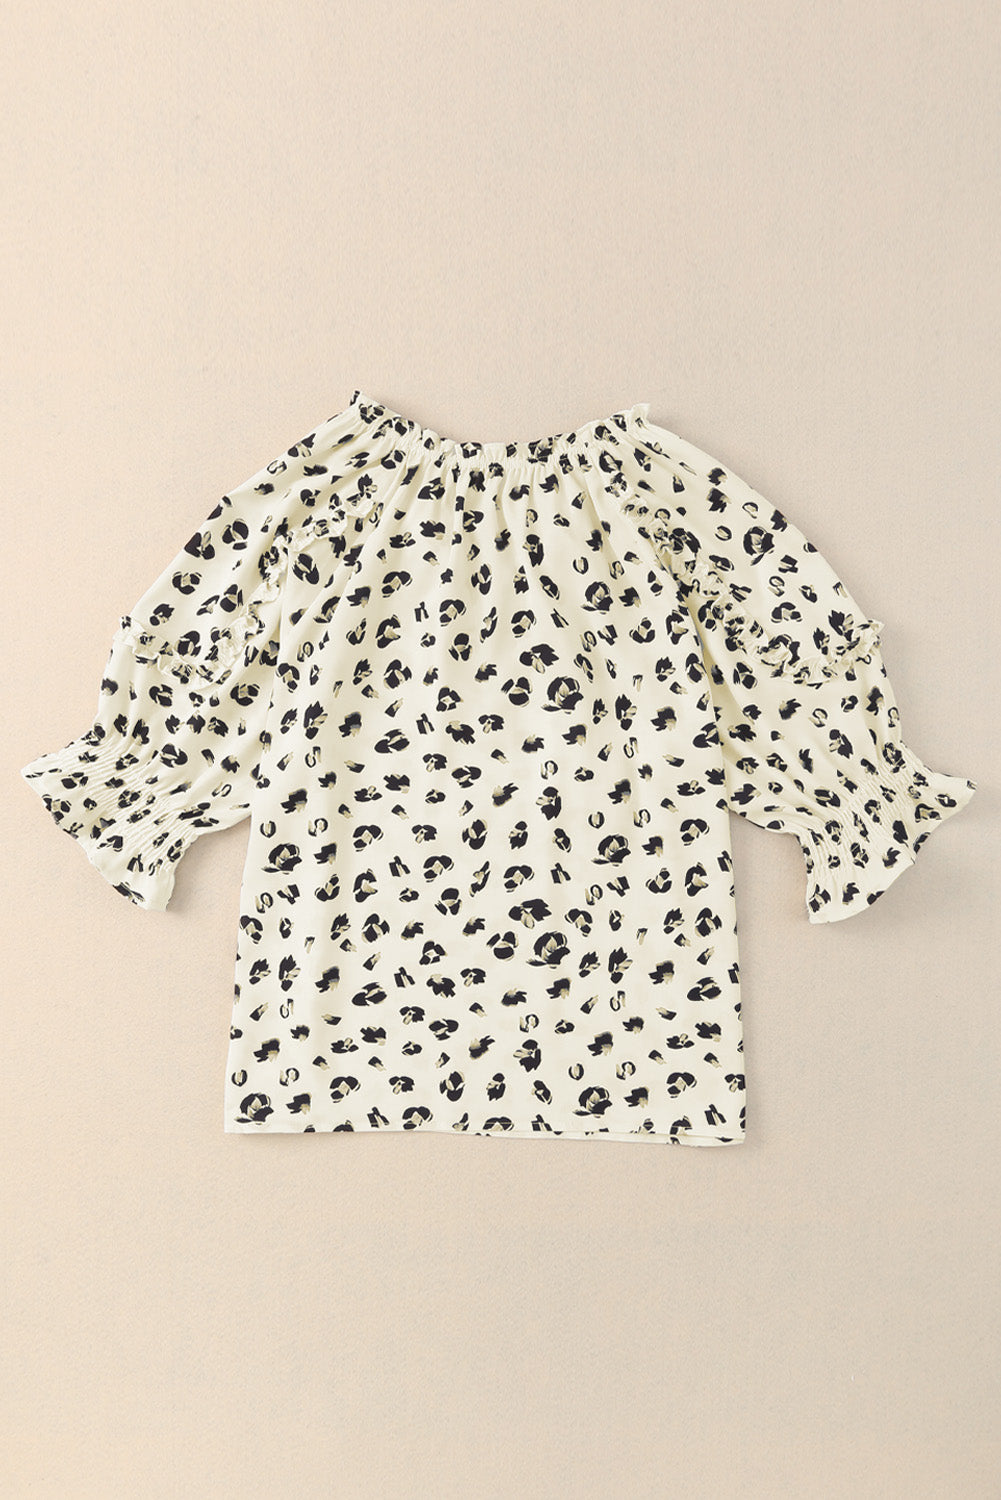 Beige Leopard Print Frilled Half Sleeve Blouse with Tassel Tie